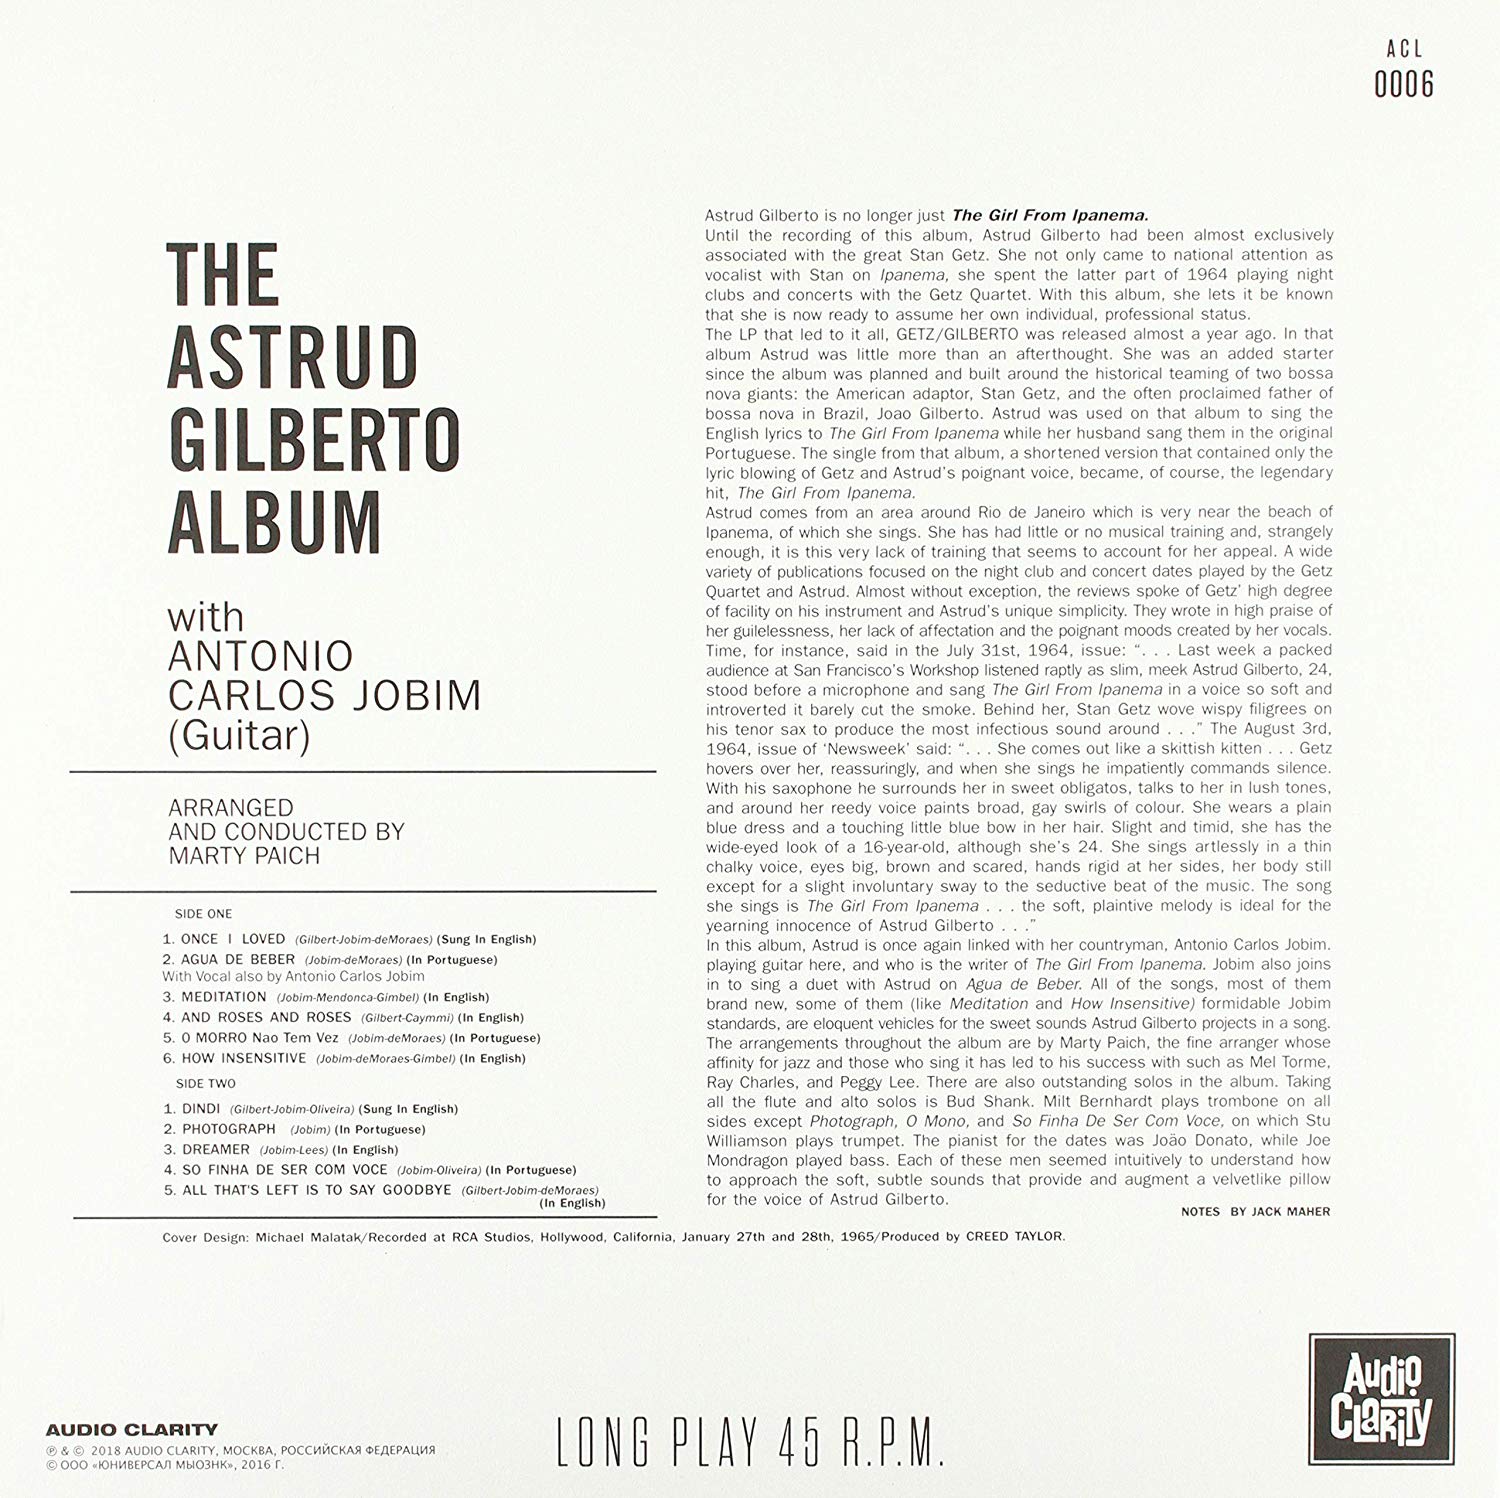 Astrud Gilberto (아스트루드 질베르토) - Astrud Gilberto Album [LP]